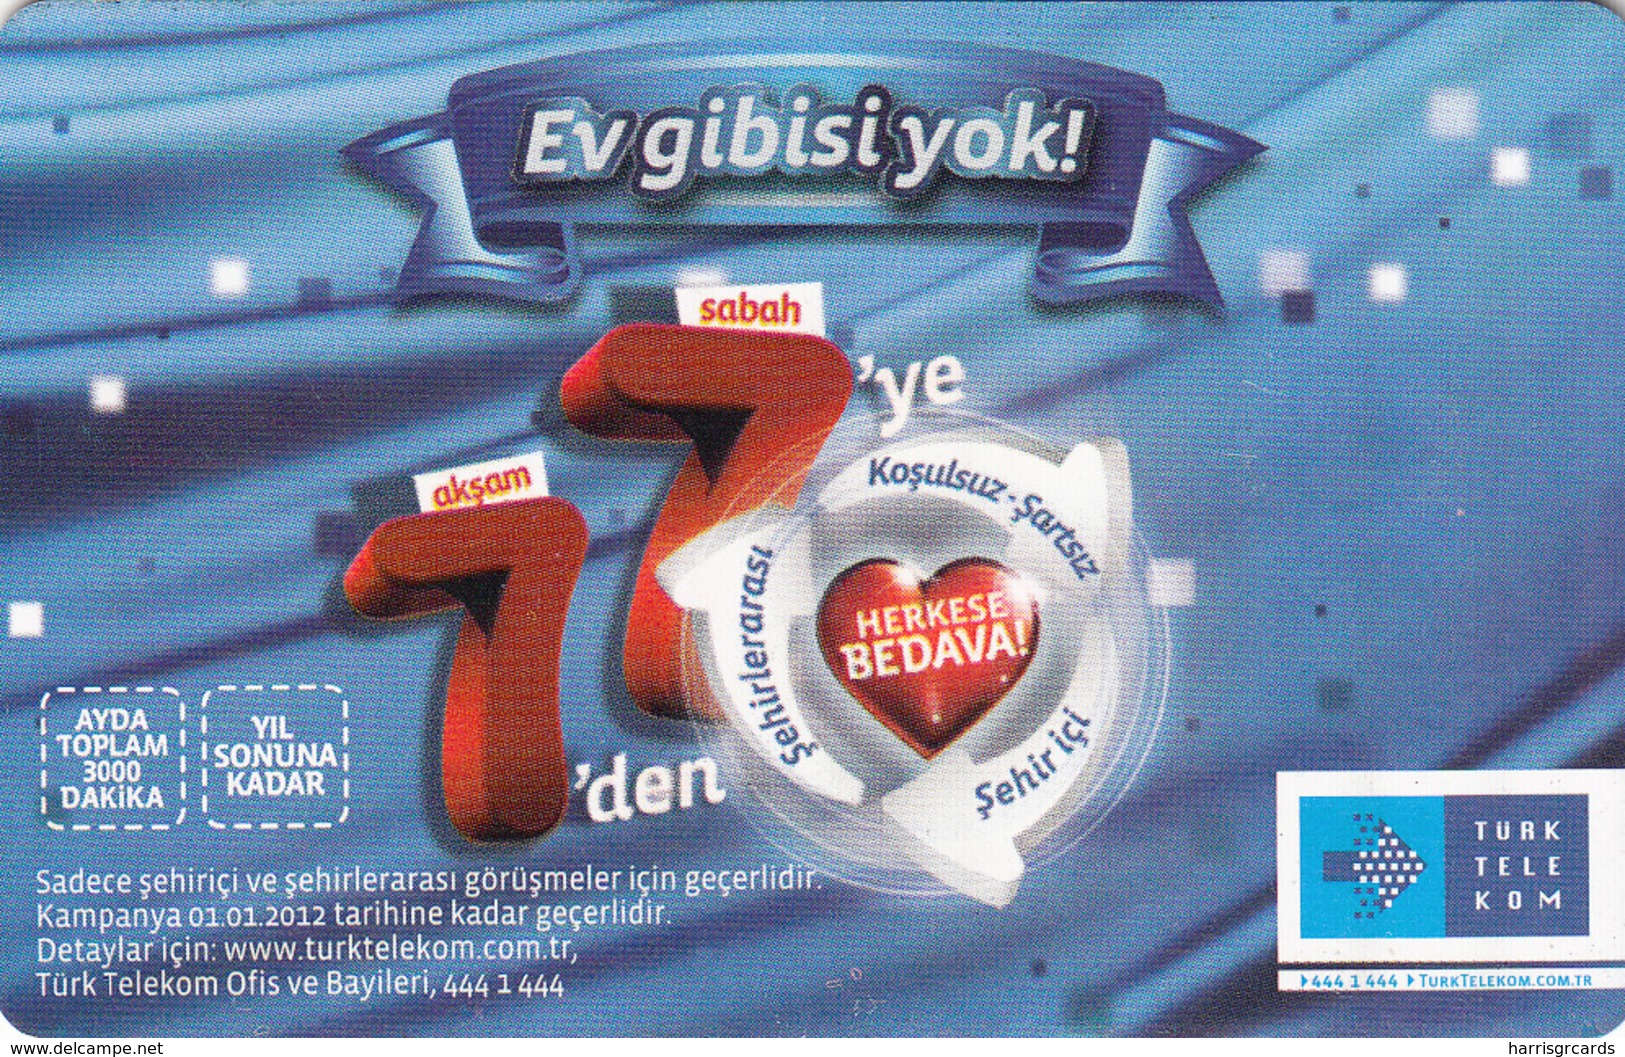 TURKEY - Ev Gibisi Yok , Aralik 2013, Gemplus - GEM5 (Red) , 4₤ - Turkish Lira ,07/11, Used - Turquie